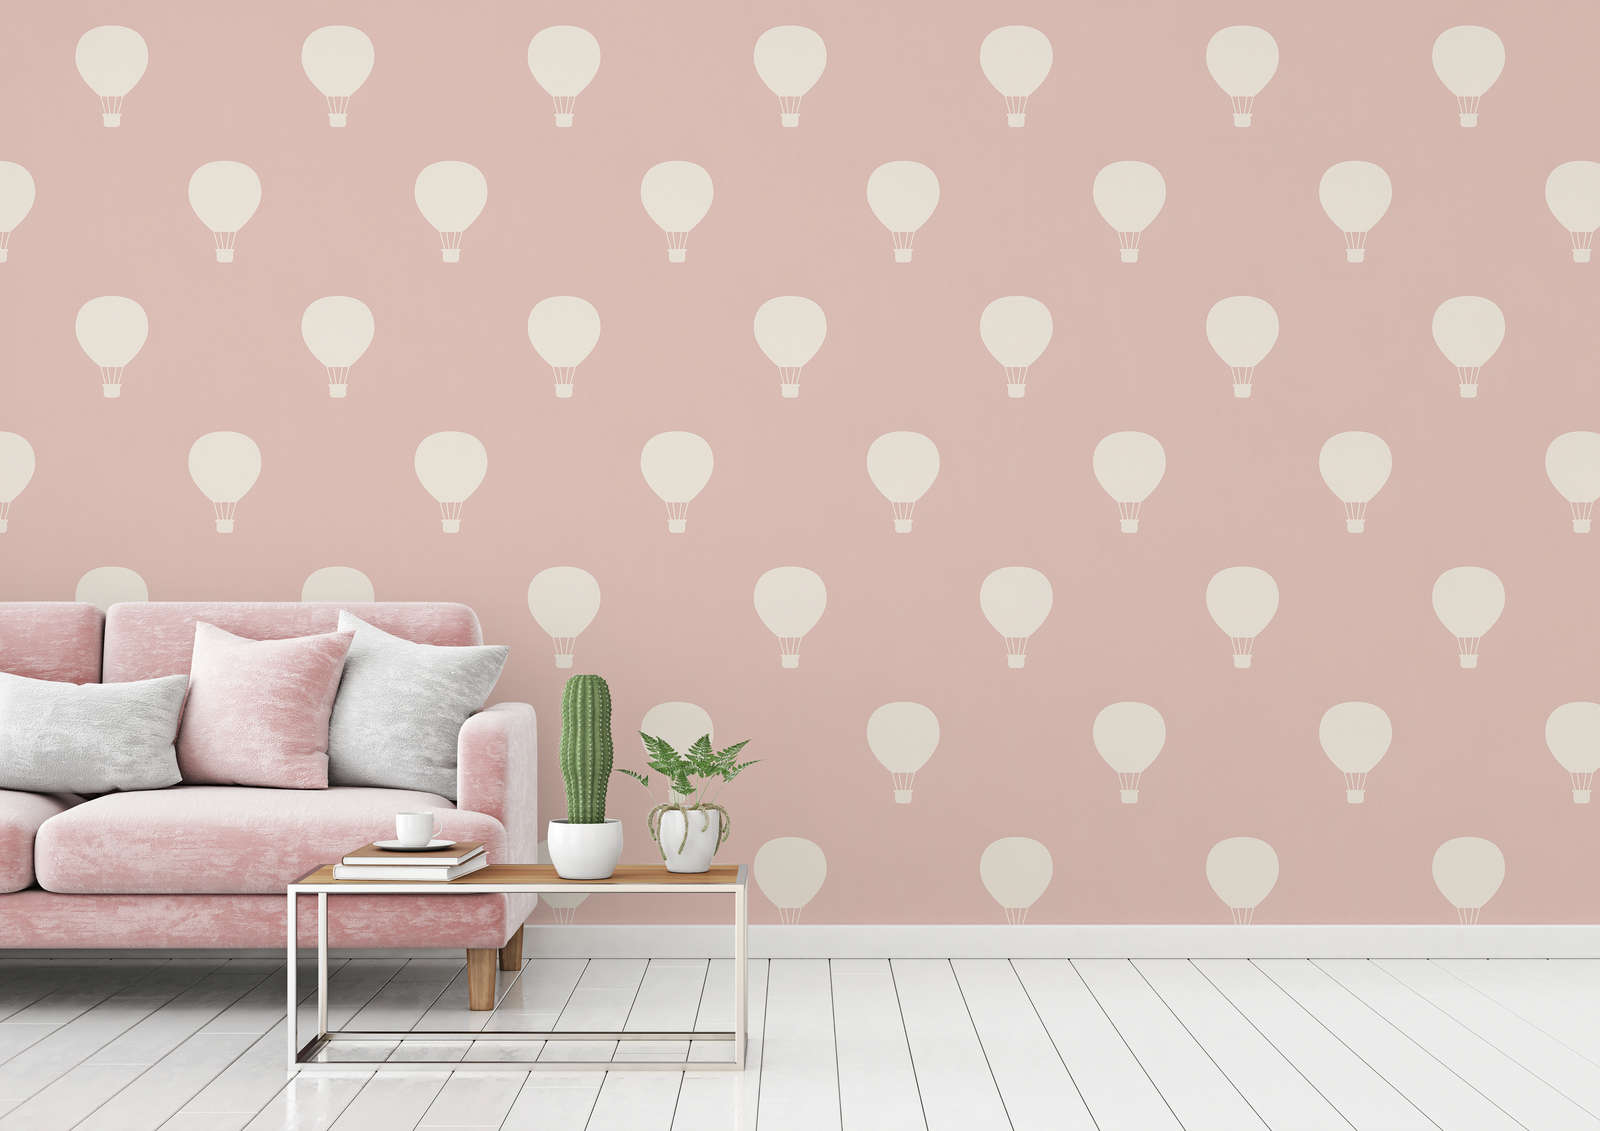             Nursery wallpaper with hot balloon motif - cream, pink
        